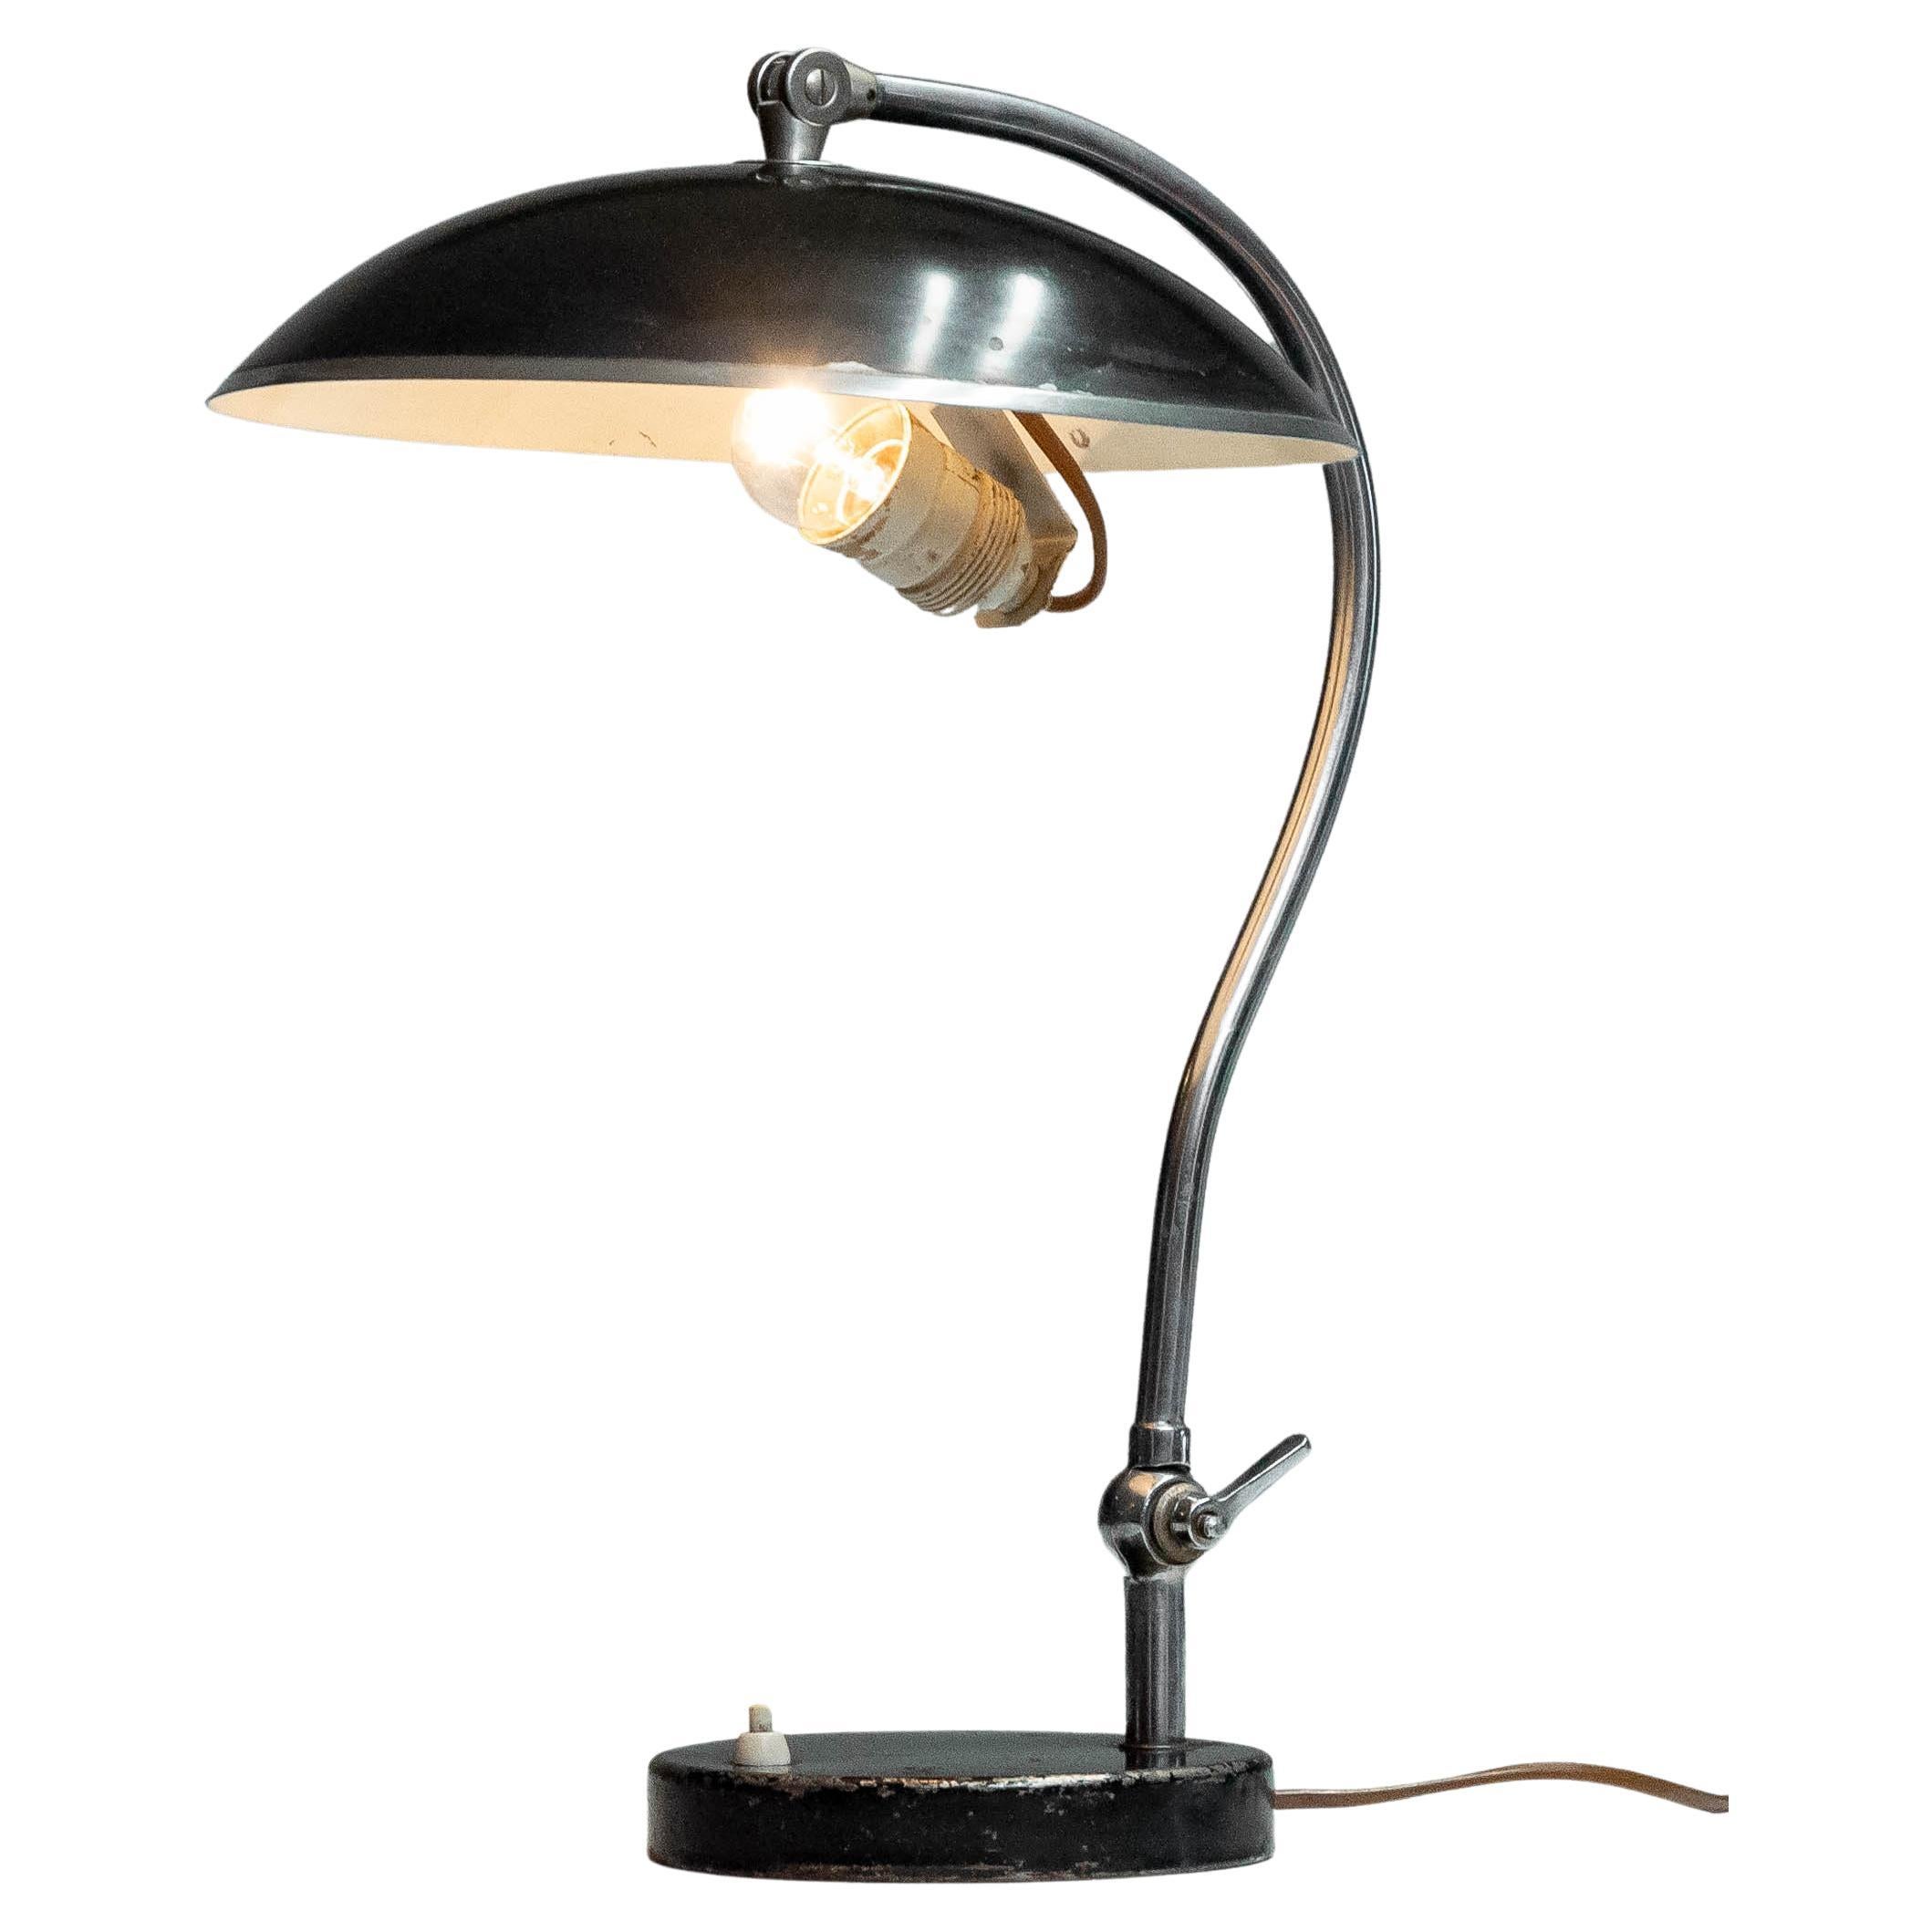 1930s Black Desk / Table Lamp by Boréns Model 528 Simular to Svenskt Tenn 8528